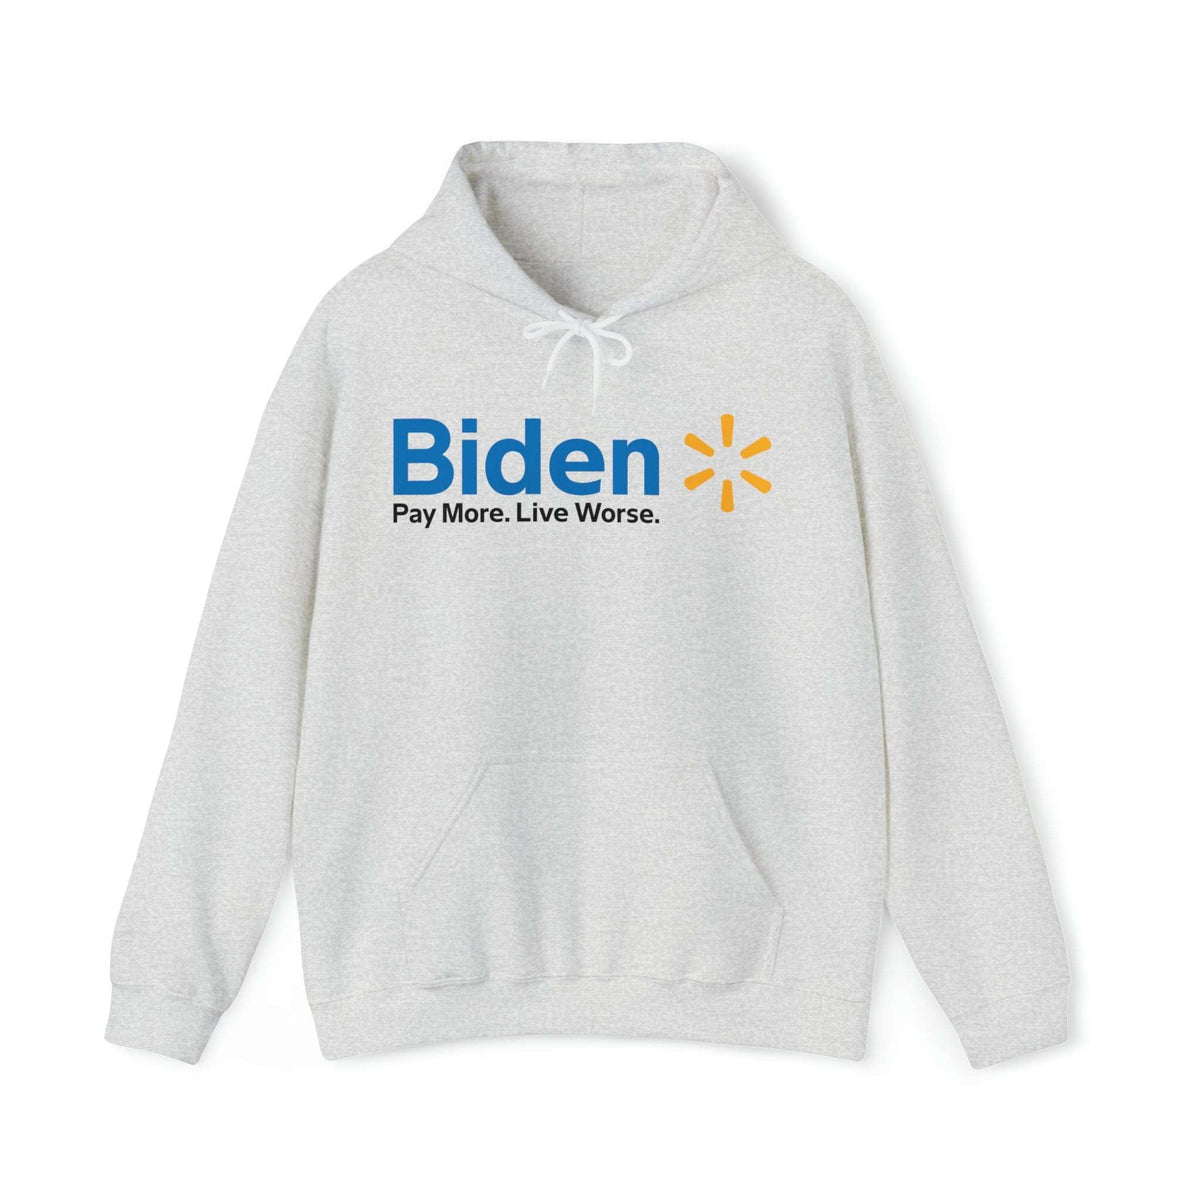 Biden Pay More Live Less Hoodie - JoeBeGone